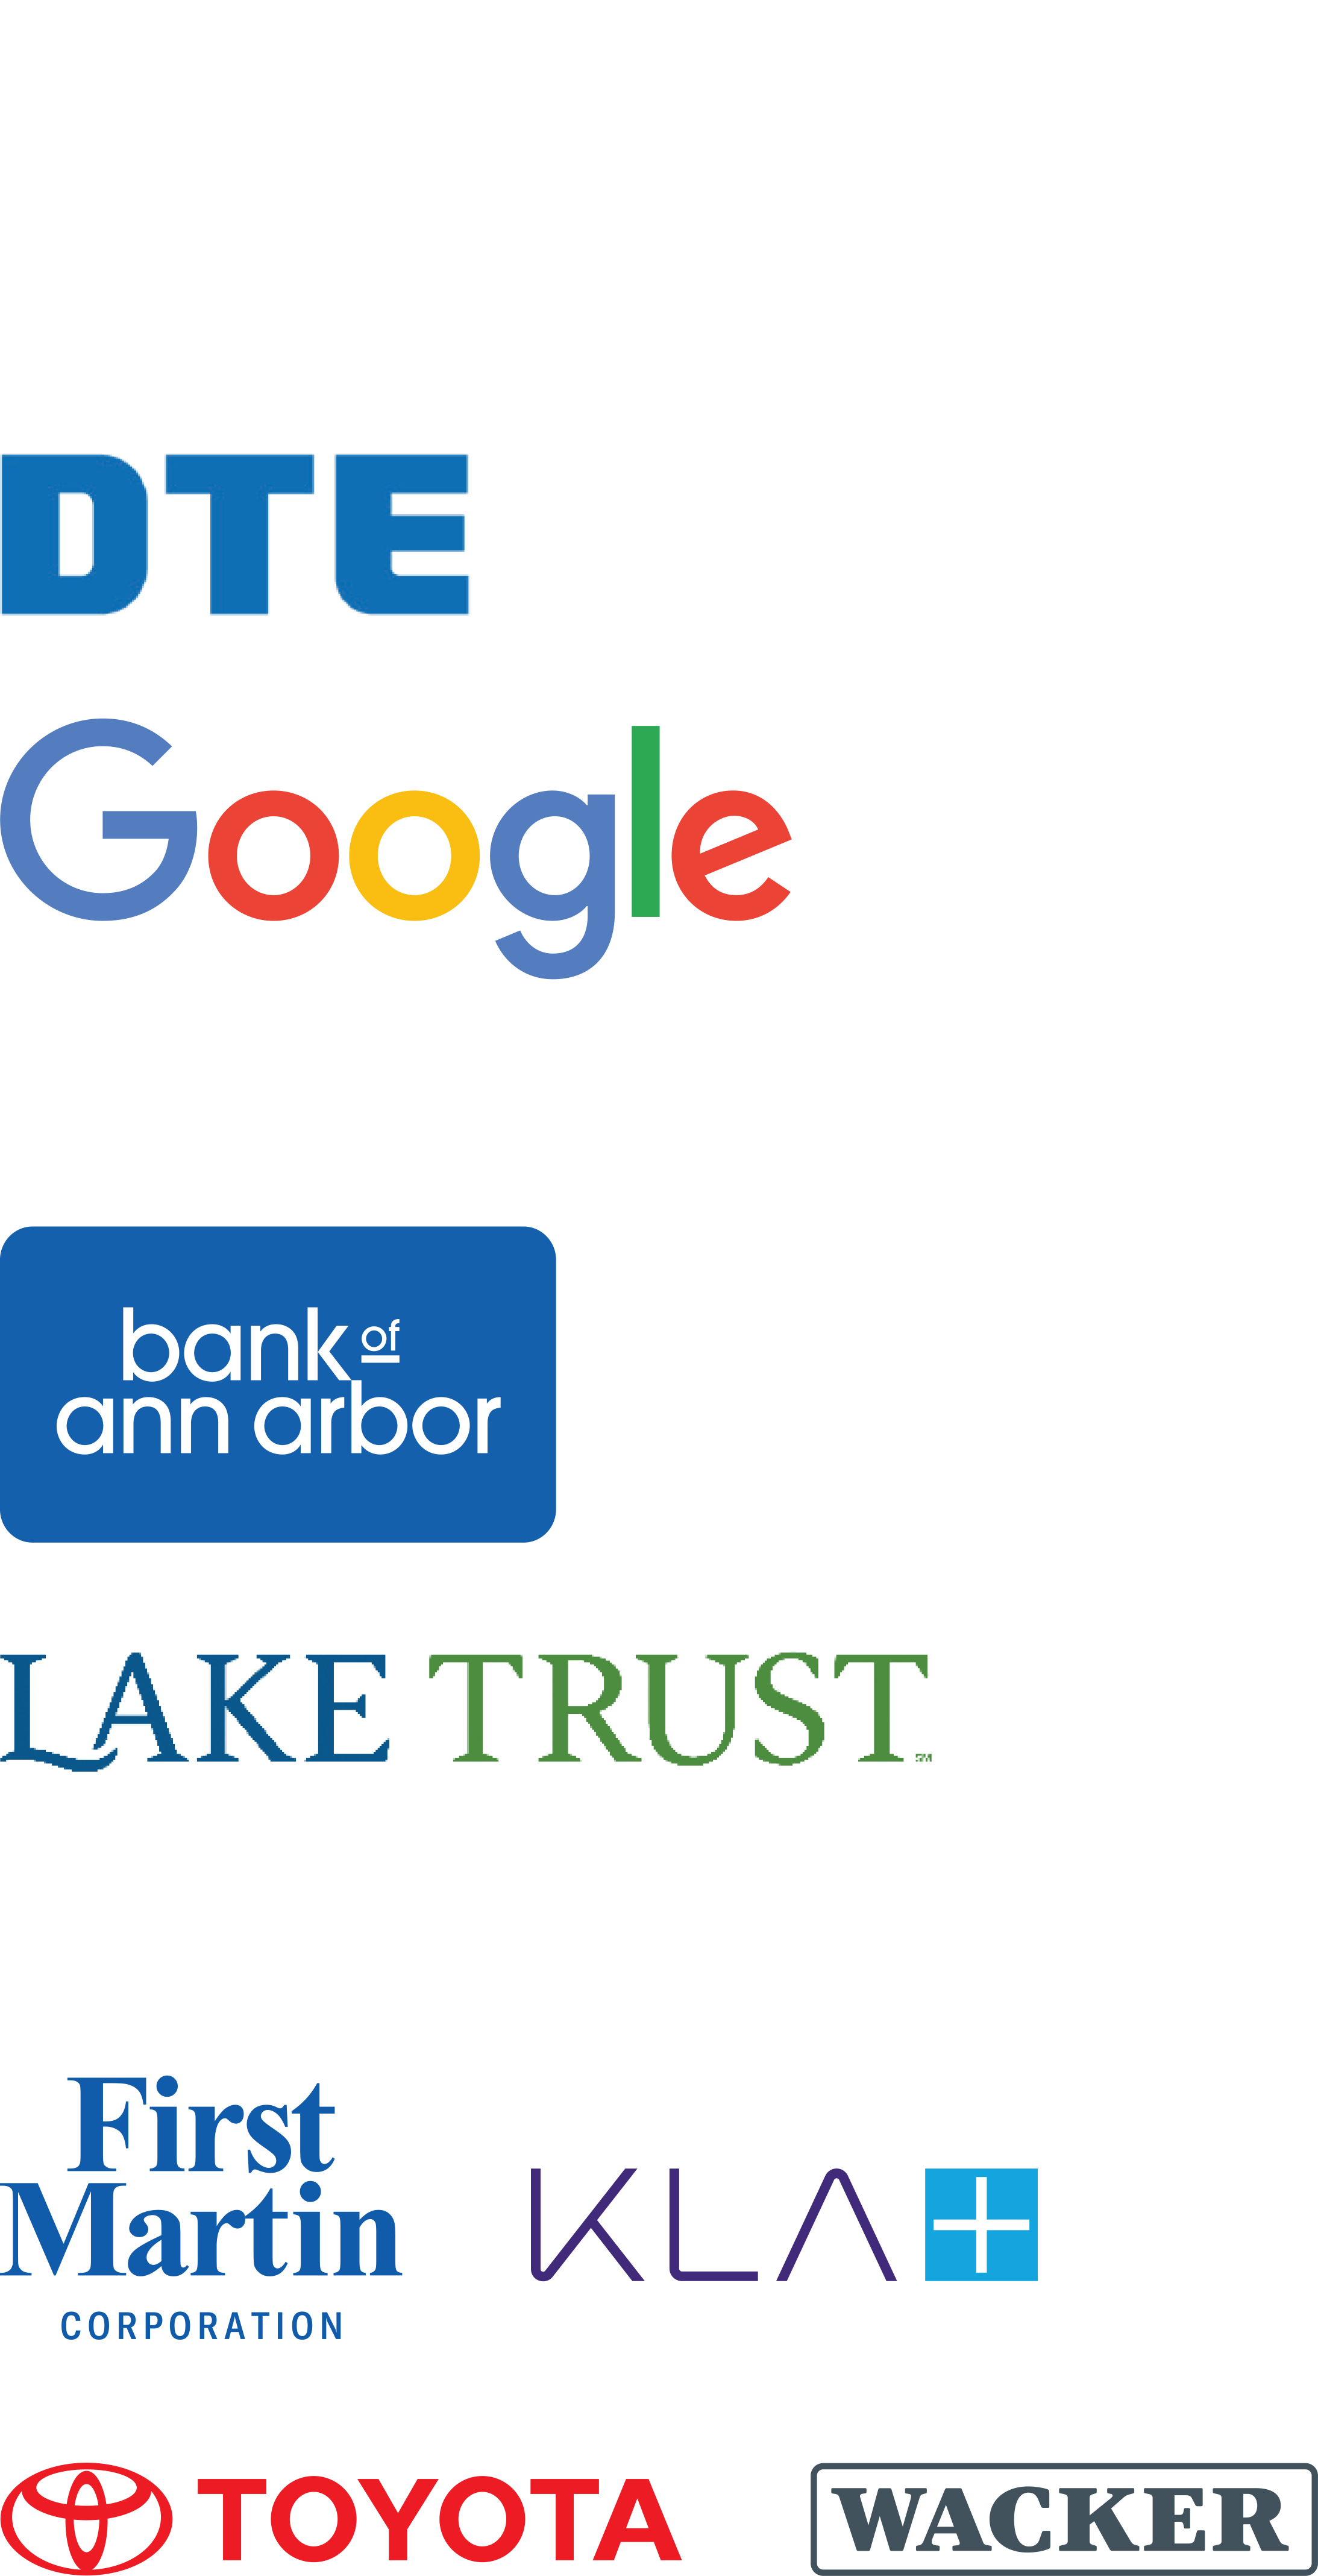 2023 top funders: DTE Foundation, Google, Bank of Ann Arbor, LakeTrust, First Martin, KLA, Toyota, Wacker